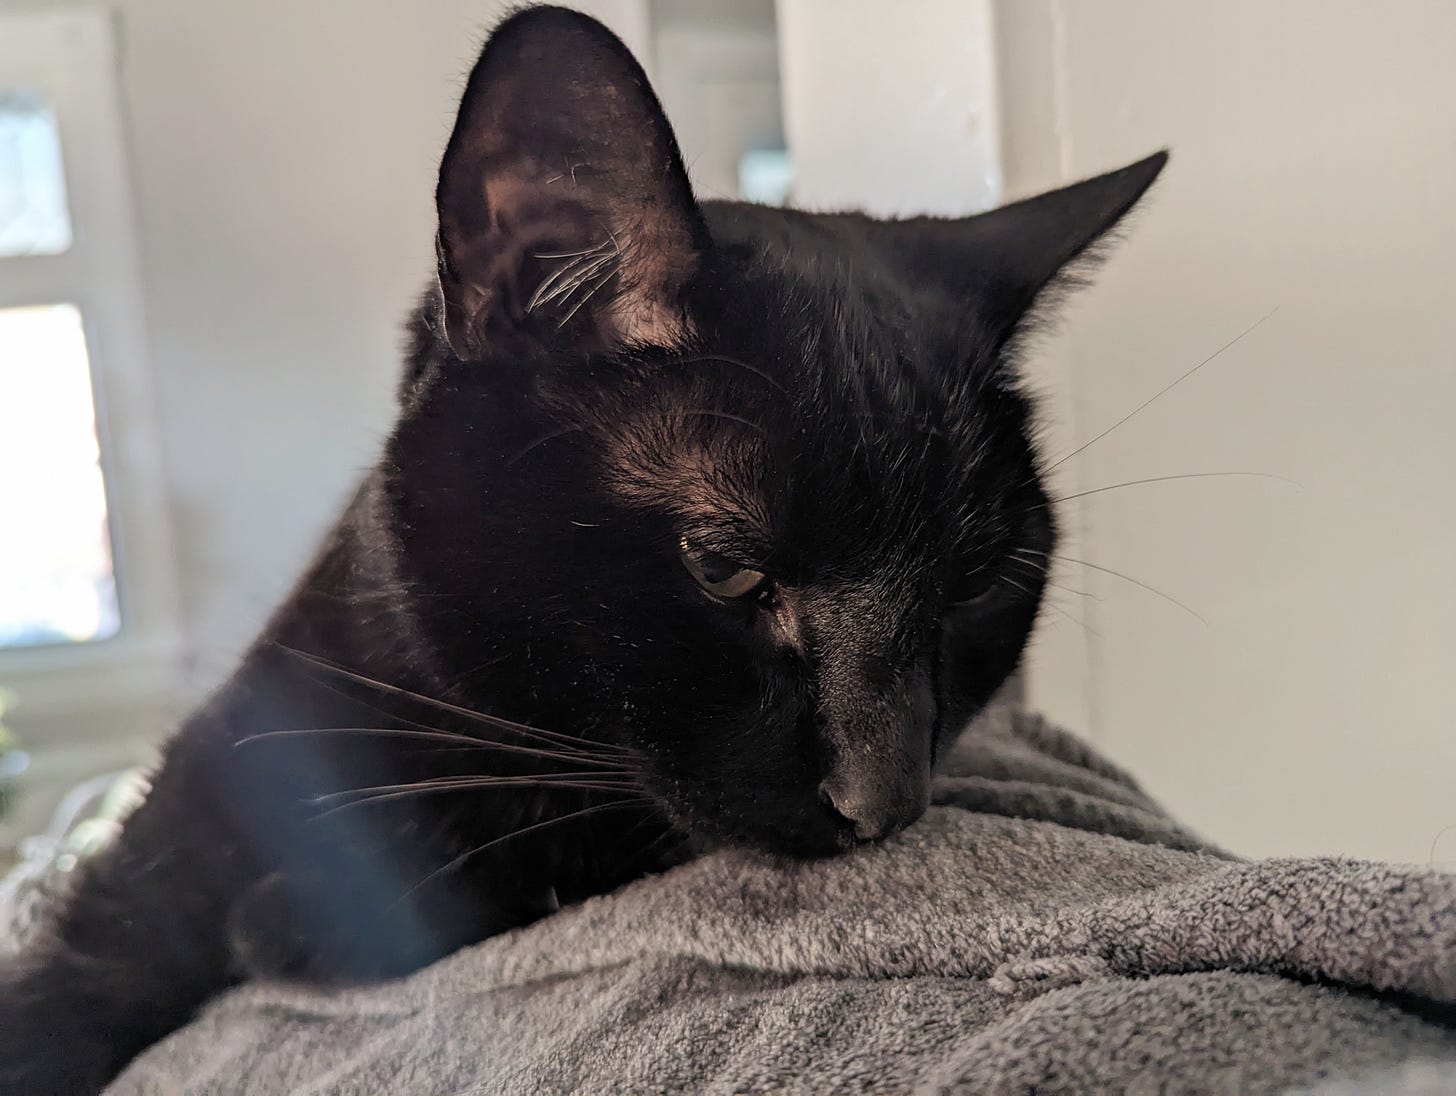 A black cat, eyes downcast, lies on a gray blanket.